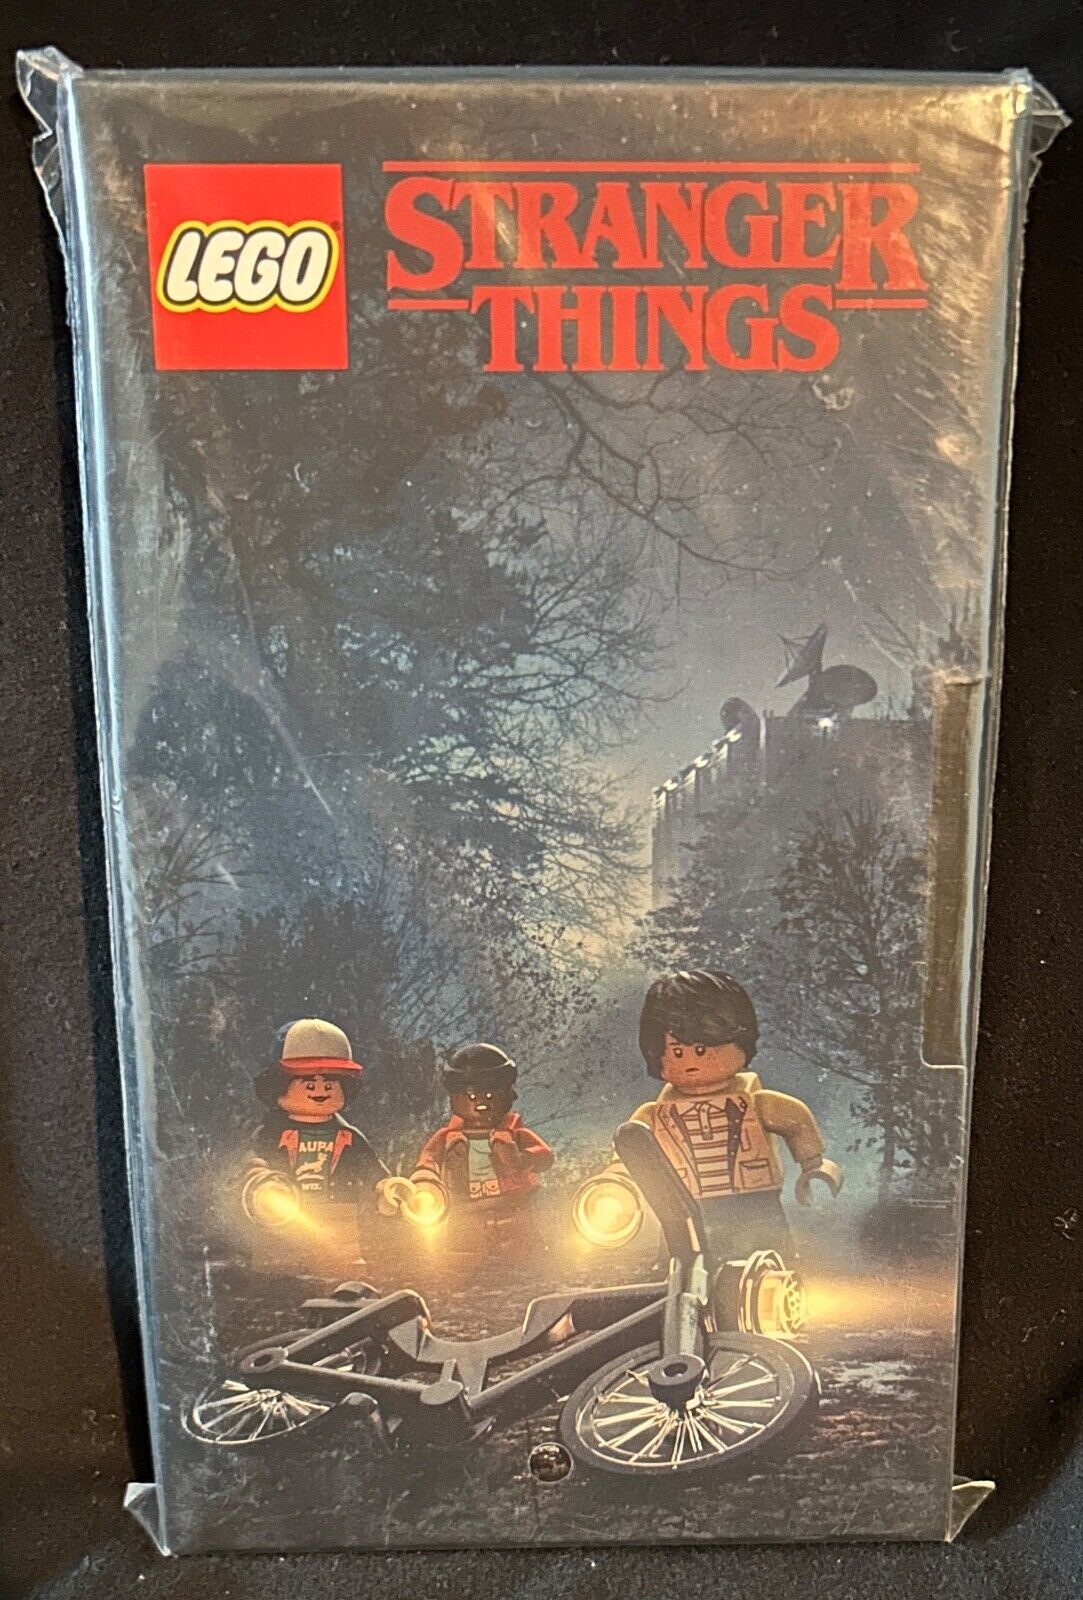 LEGO 5005933 Stranger Things Sketchbook